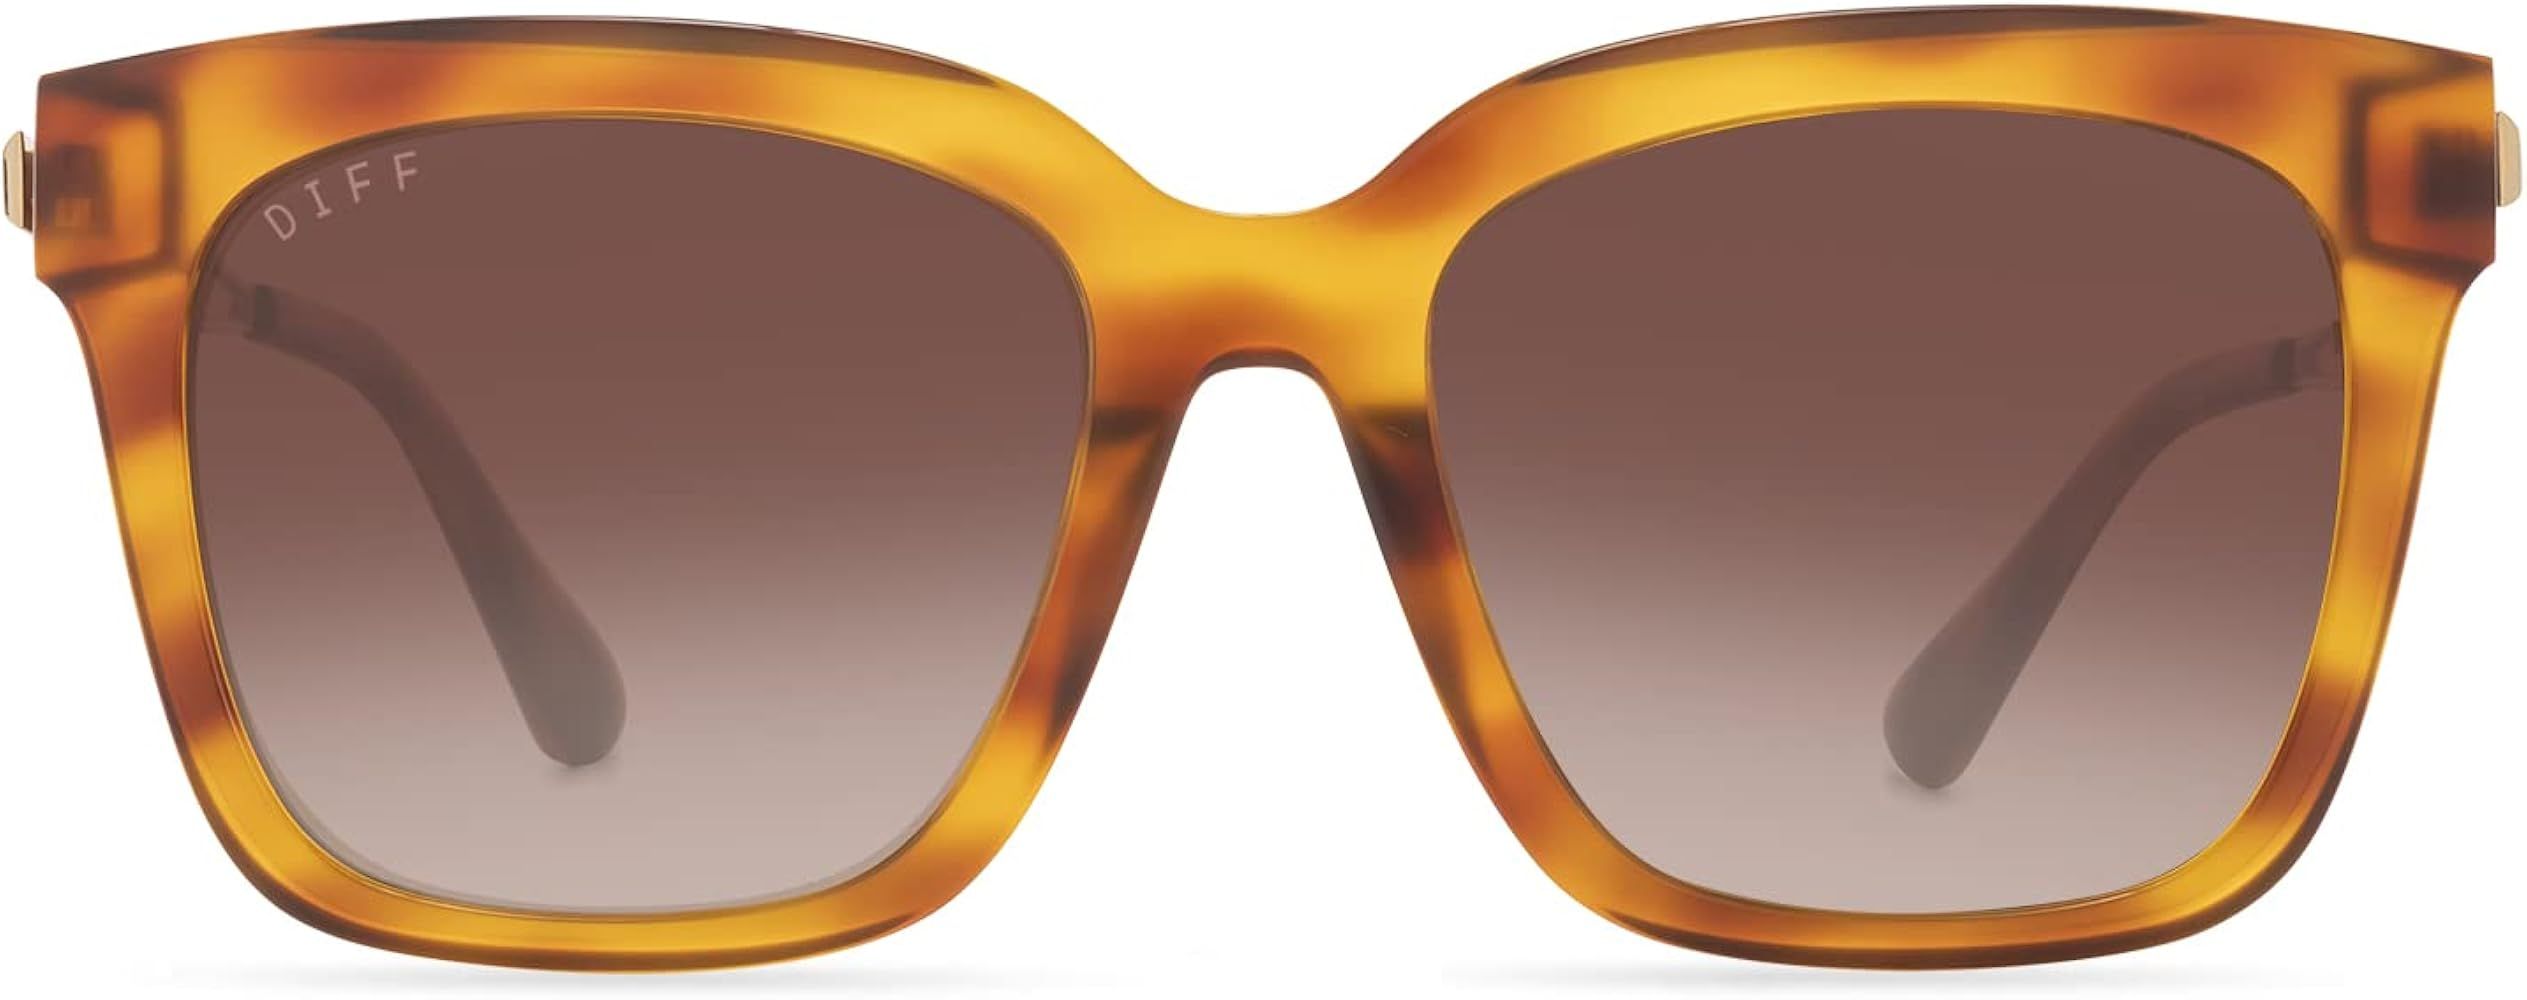 Diff Eyewear - Bella - Designer Square Sunglasses for Women - 100% UVA/UVB | Amazon (US)